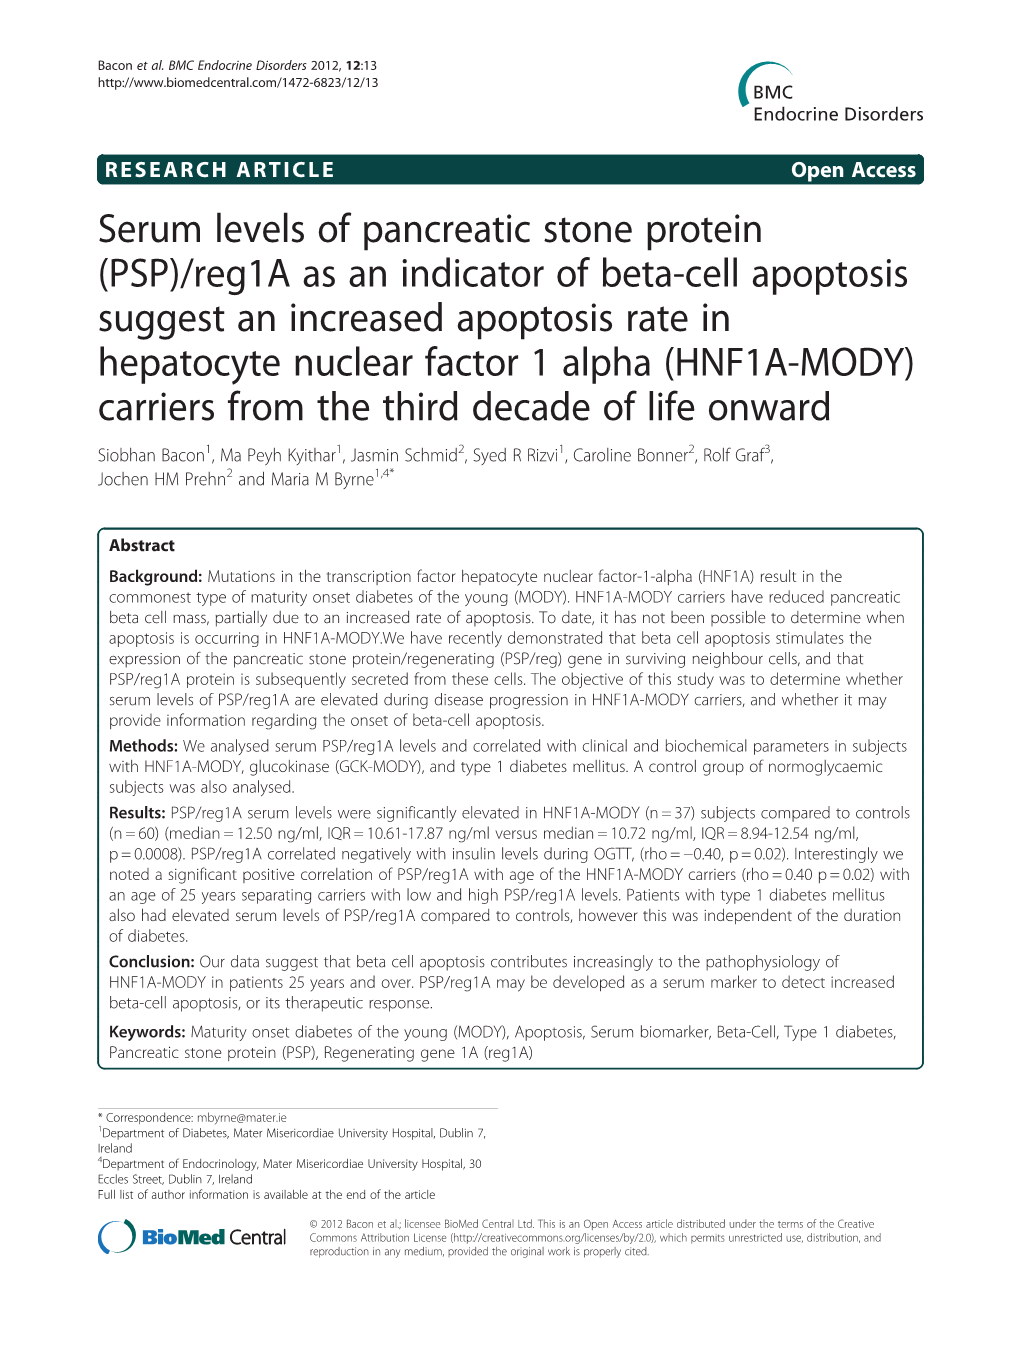 Serum Levels of Pancreatic Stone Protein (PSP)